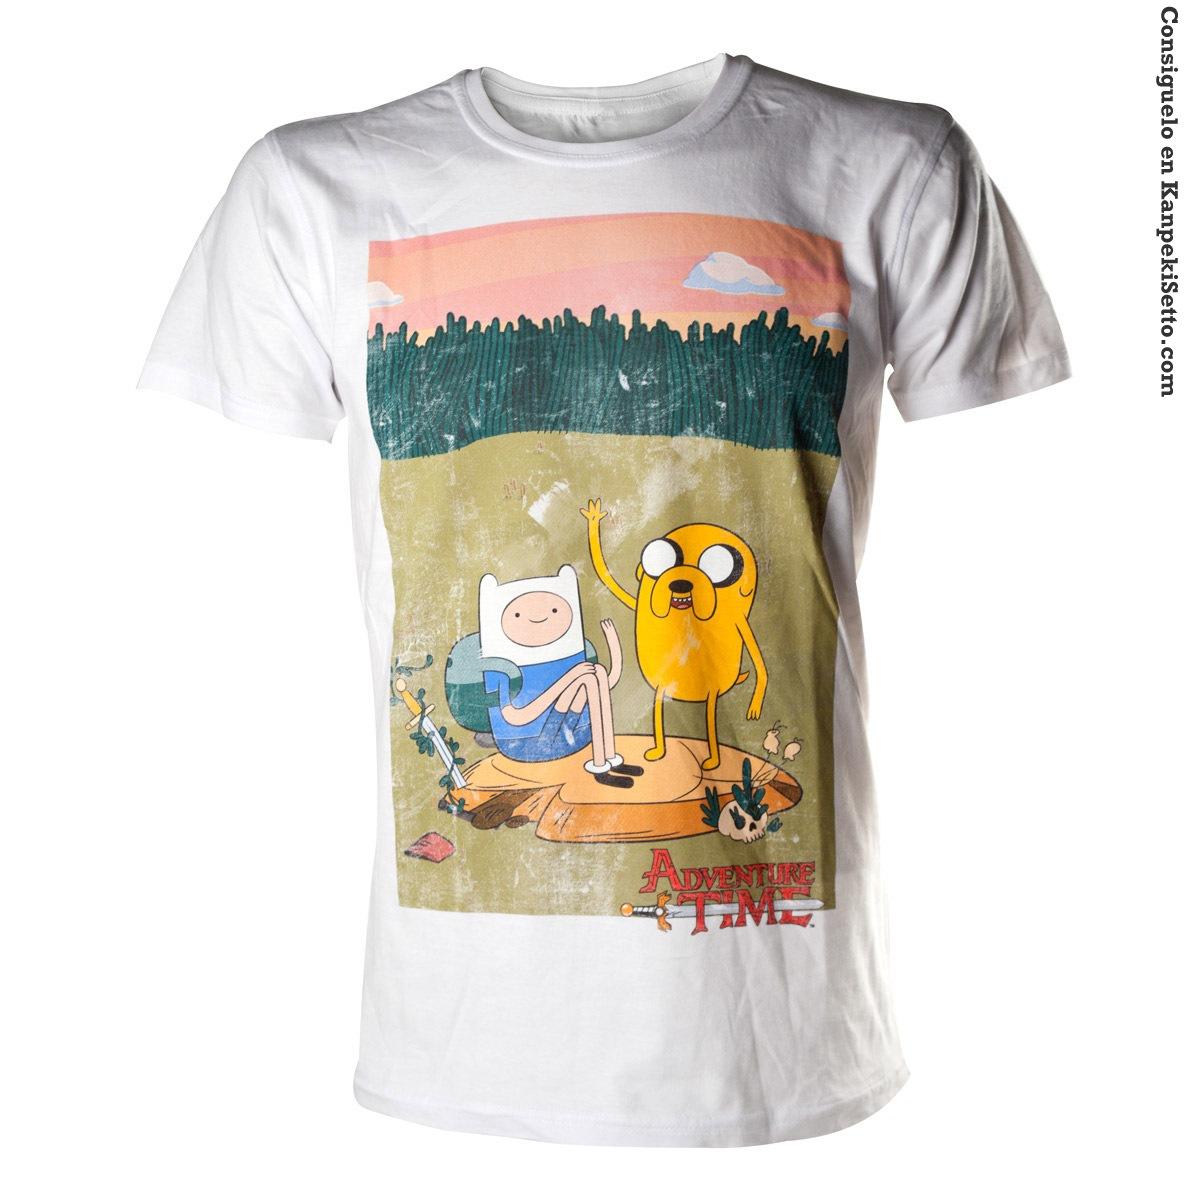 Foto Adventure Time Camiseta Finn Y Jake Talla L foto 828138